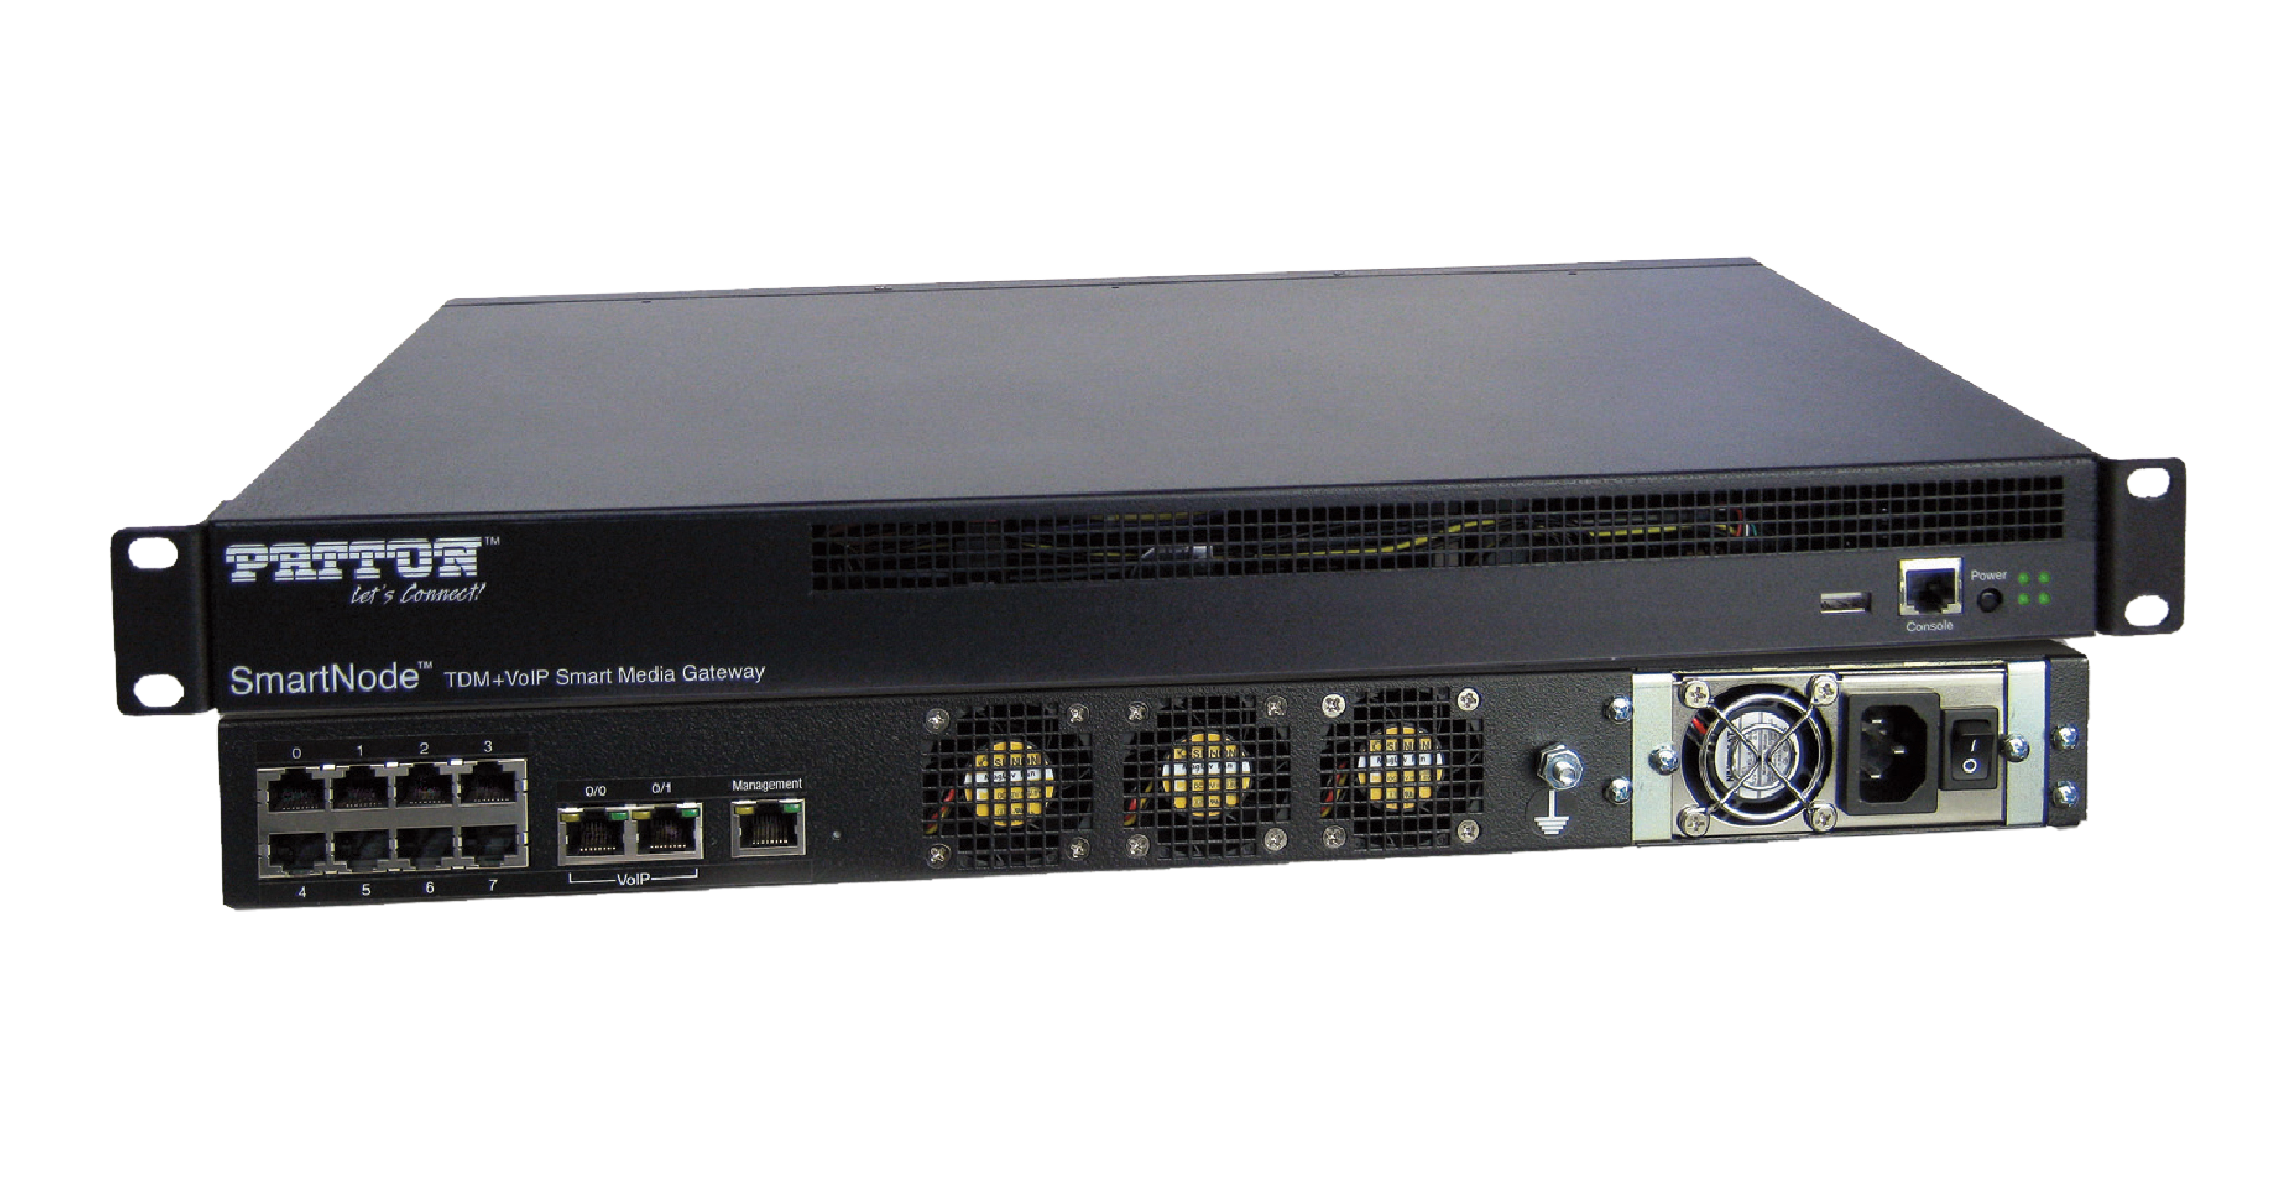 SN10100 Series TDM+VoIP SmartMedia Gateway